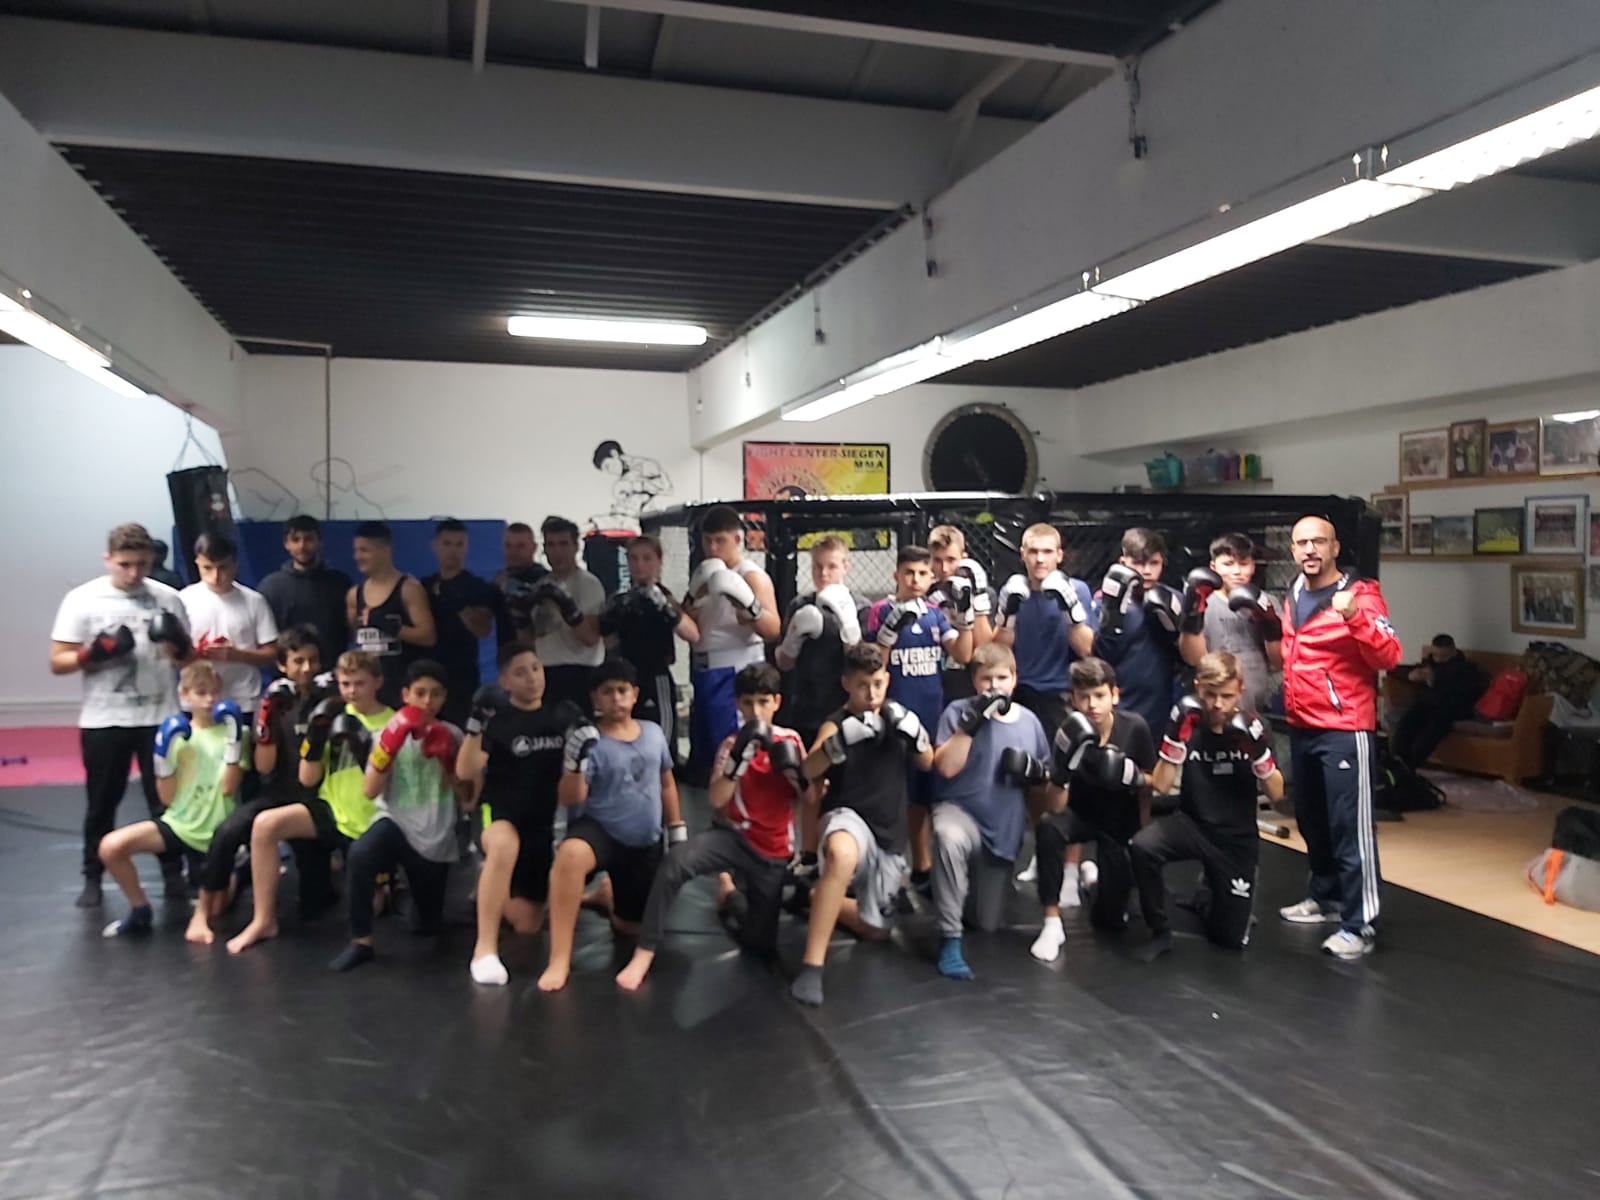 Trainingsgruppe Kickboxen und Boxen